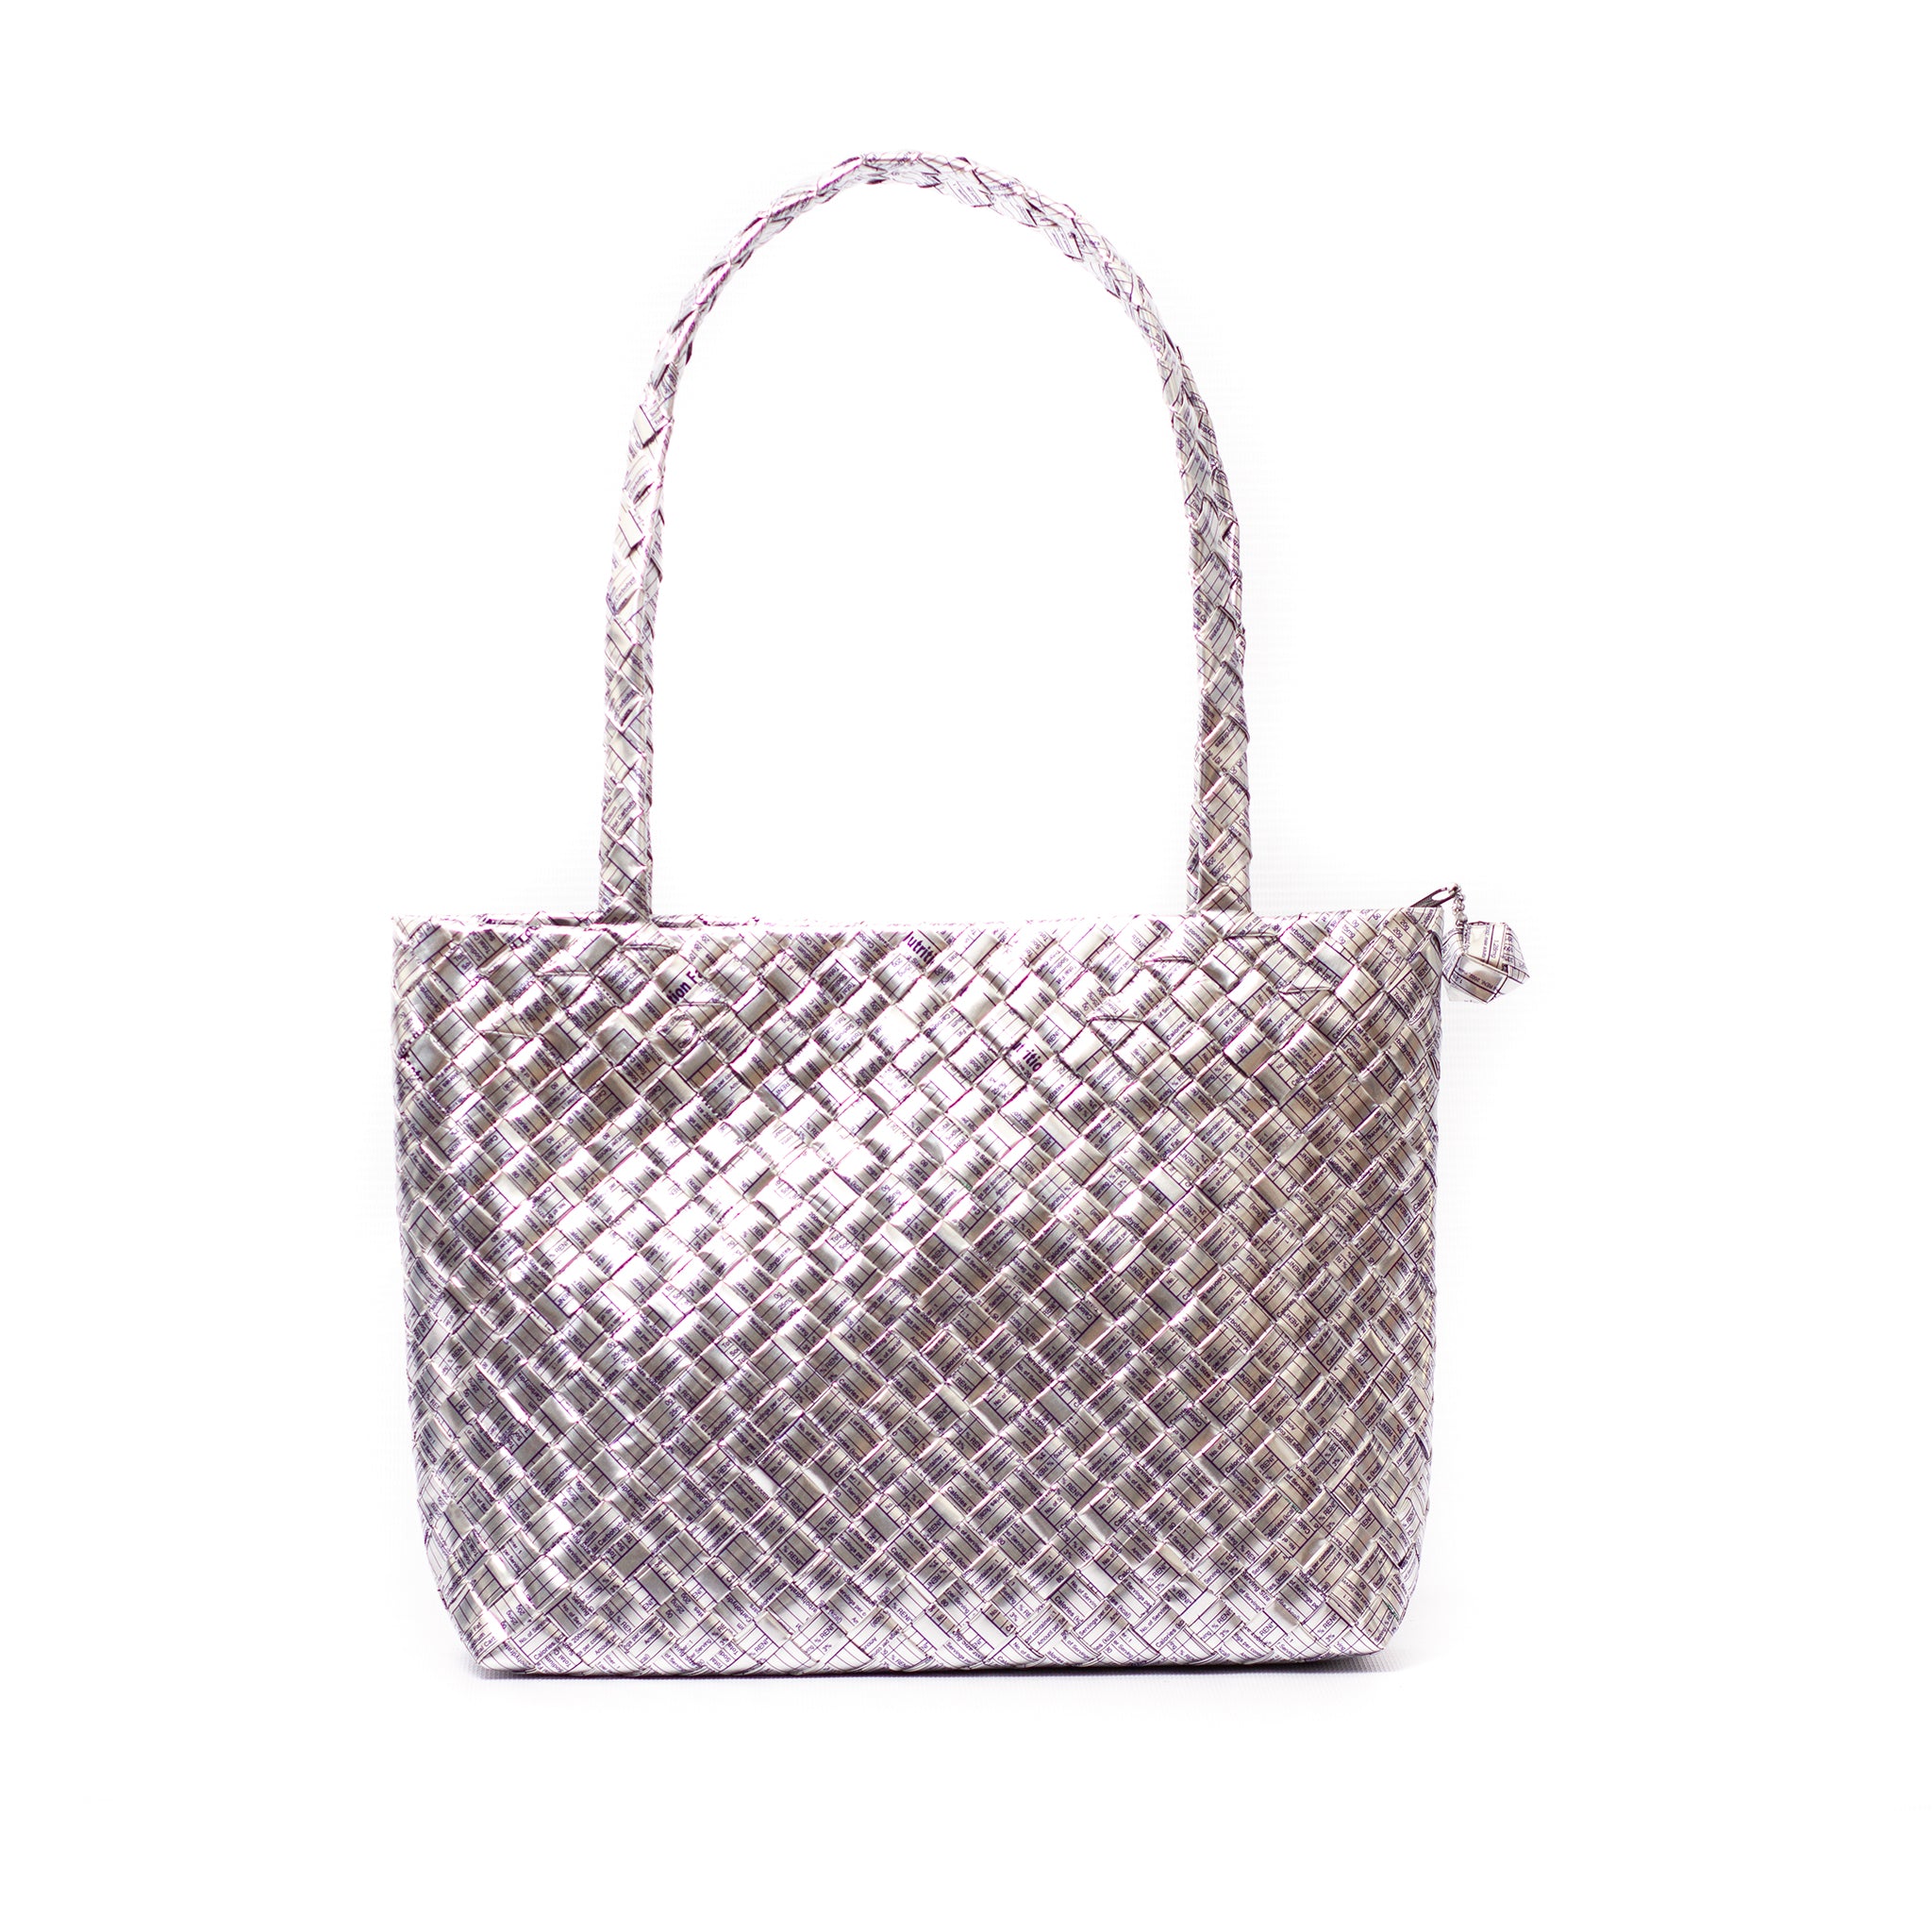 Shop Silver Mini Bags